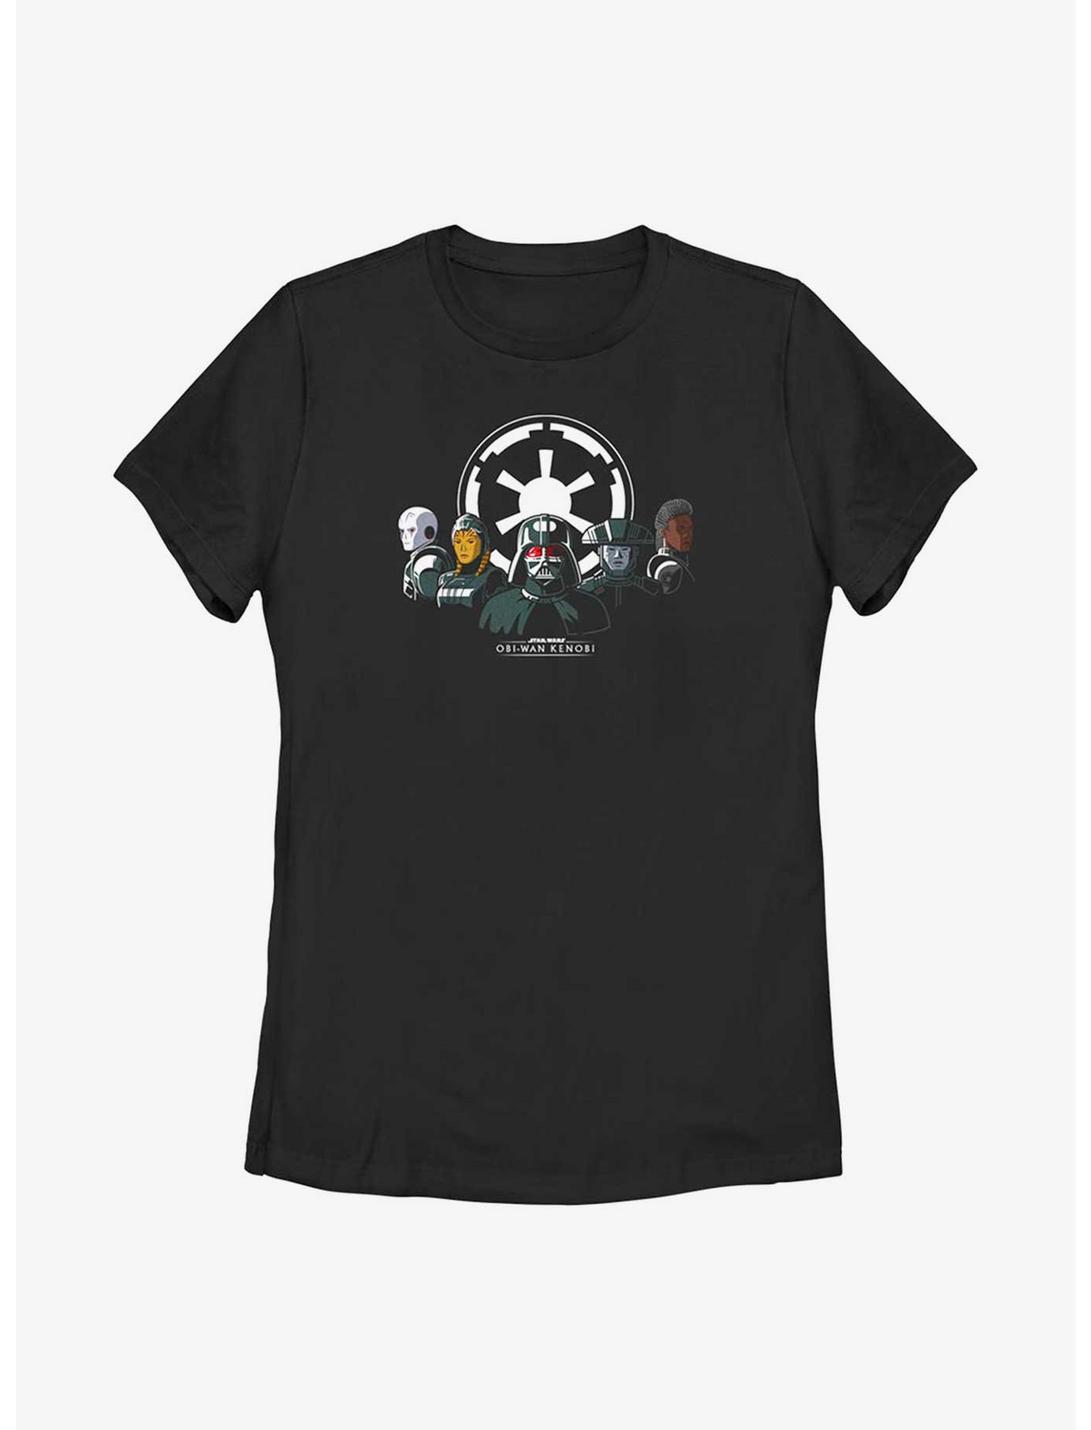 Star Wars Obi-Wan Kenobi Imperial Group Womens T-Shirt, BLACK, hi-res